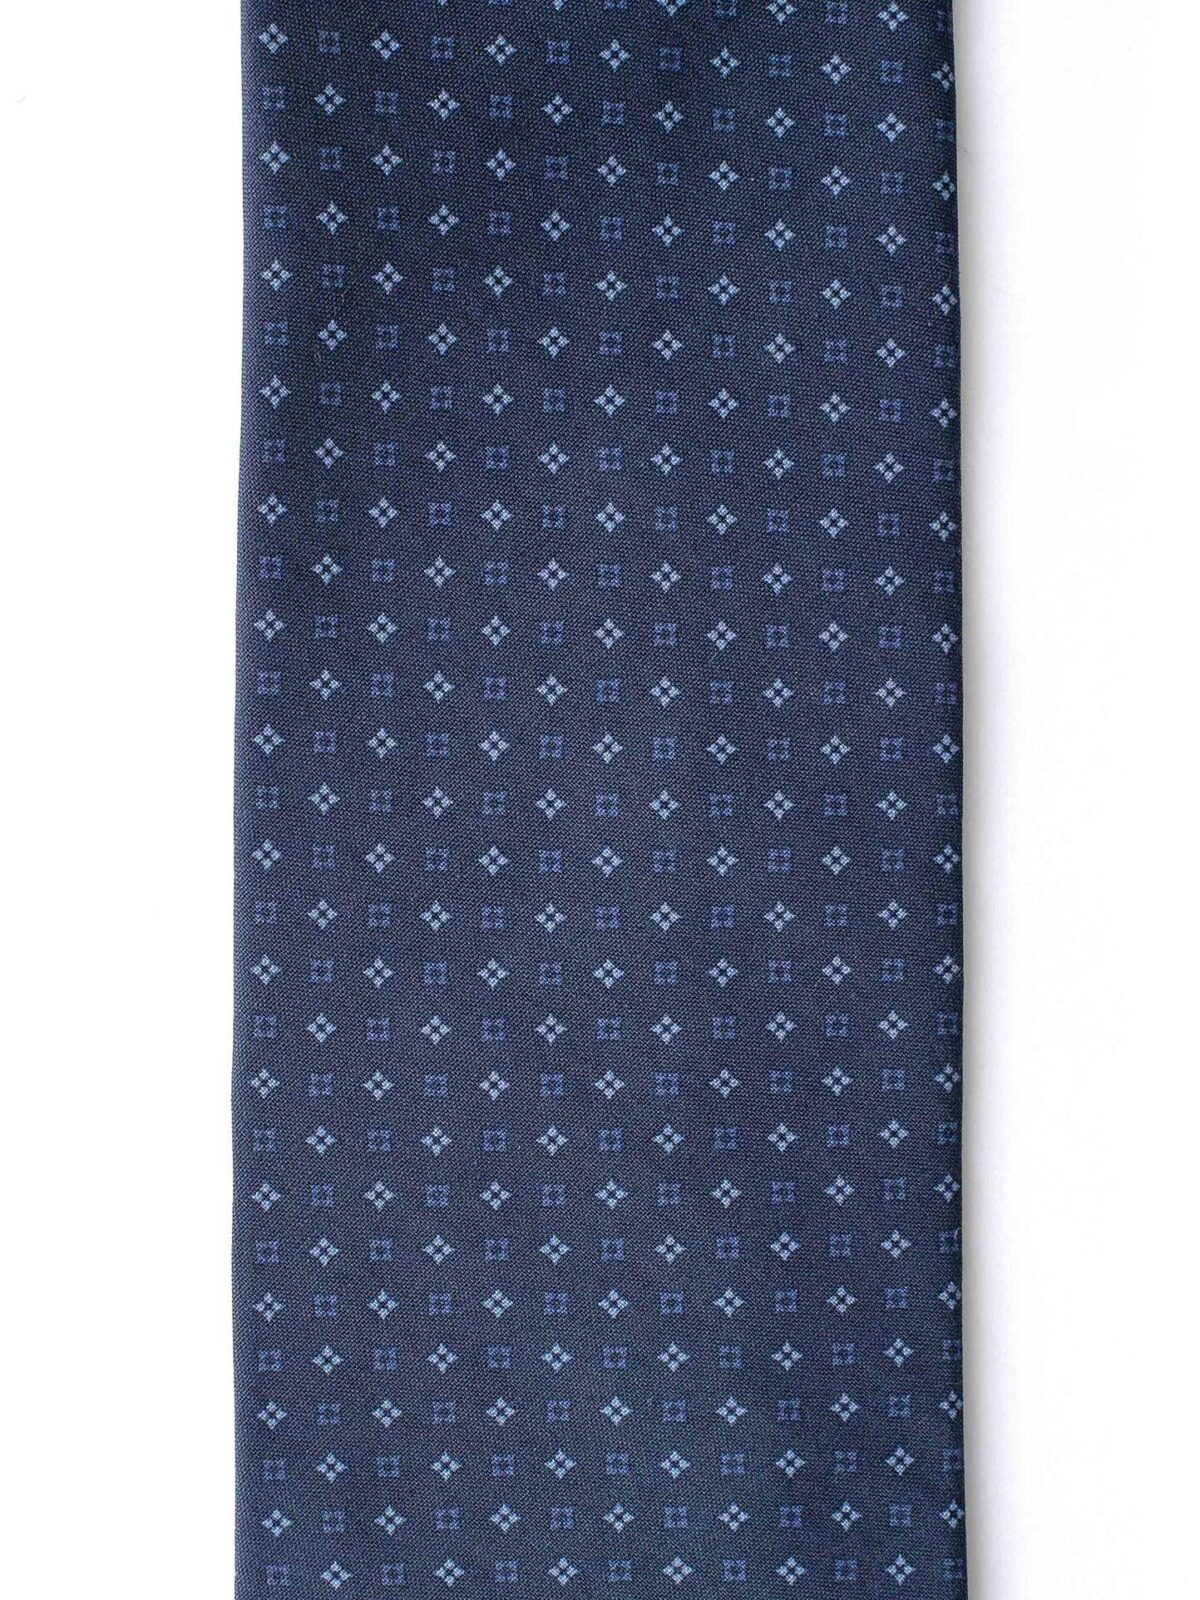 Slate Blue Tonal Foulard Silk Tie